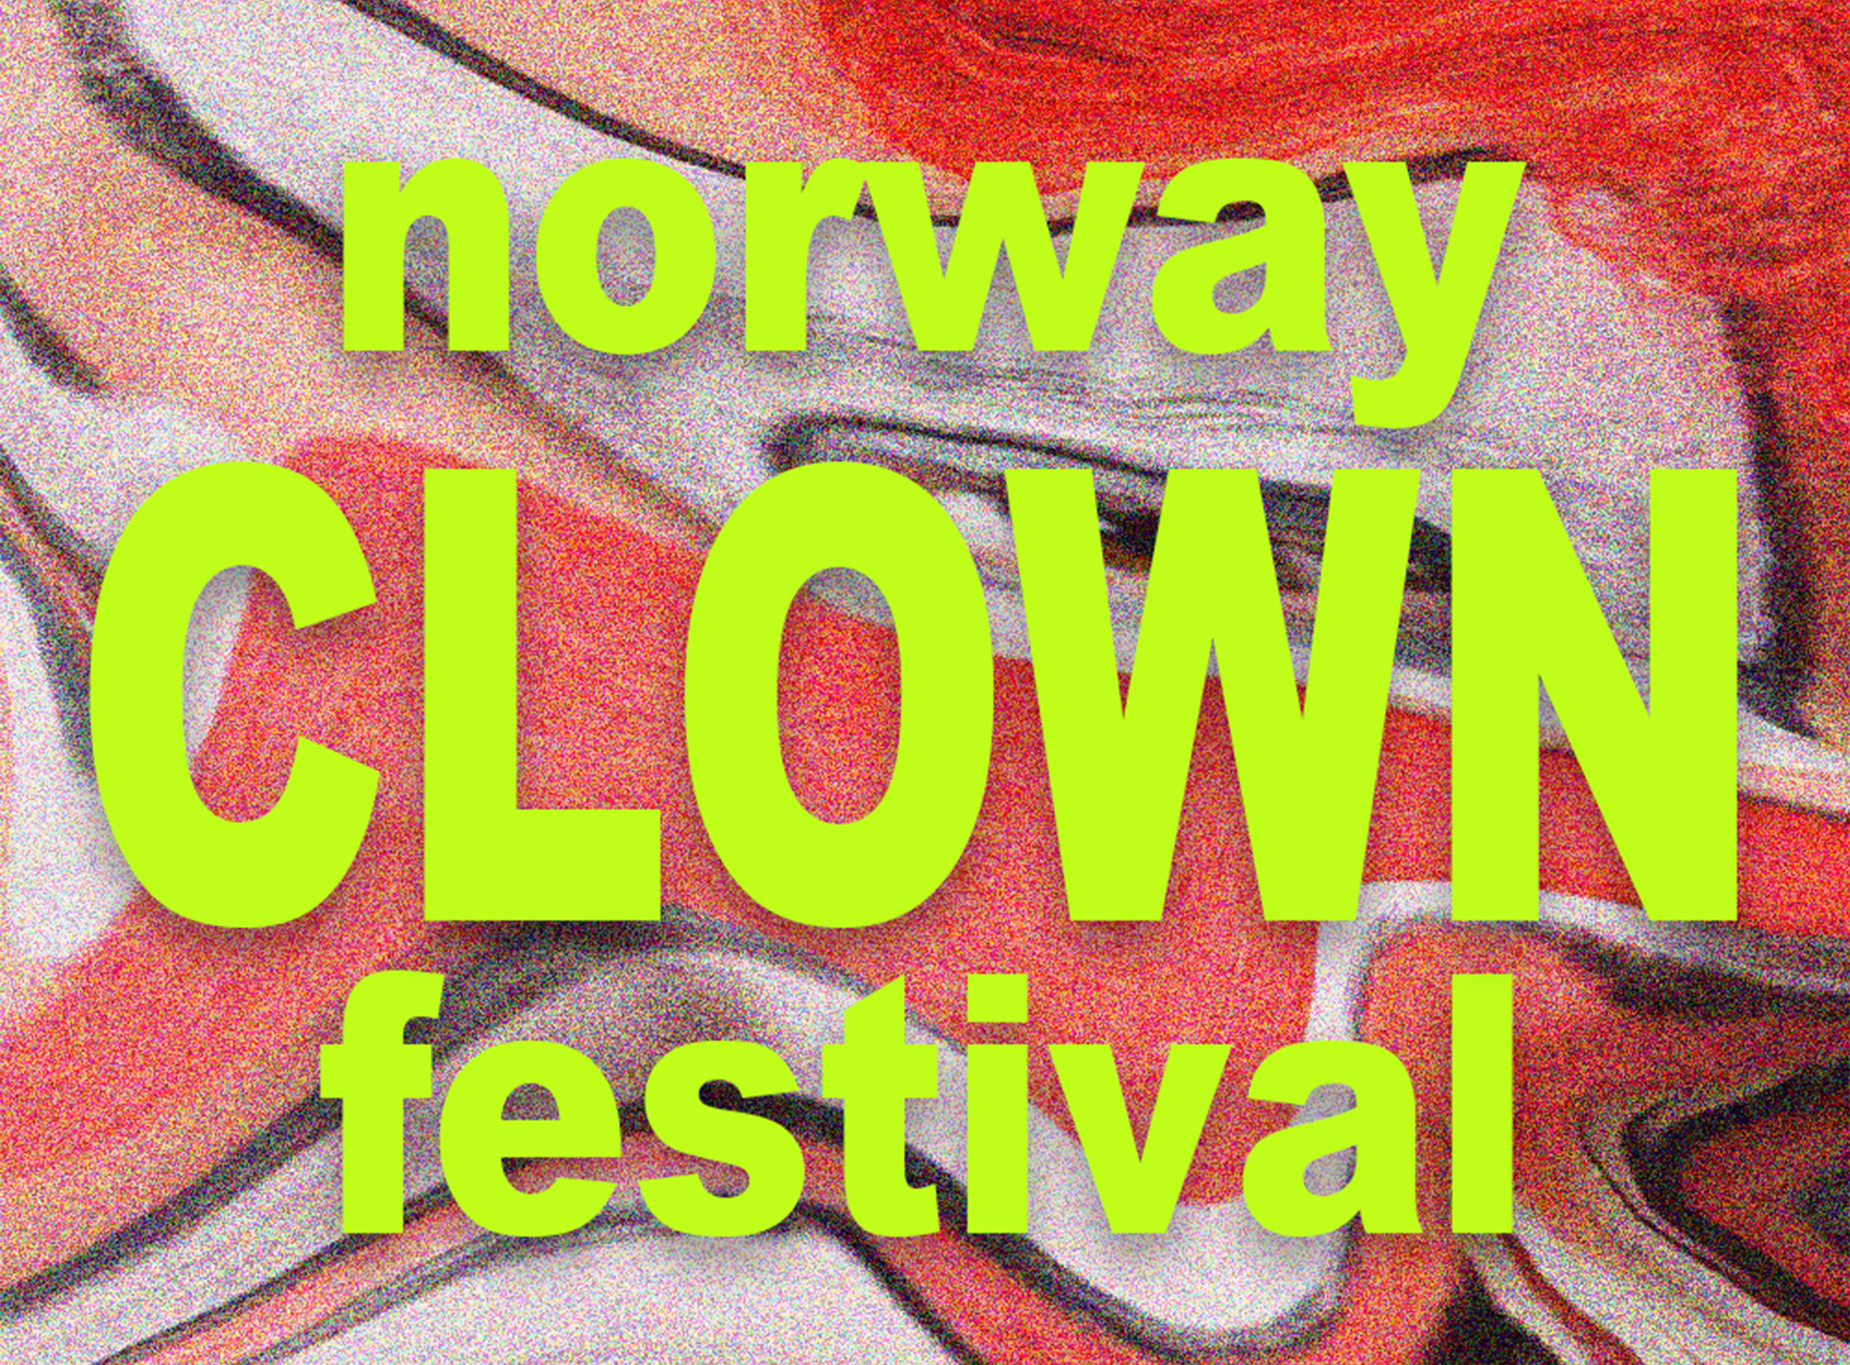 Norway Clown Festival presale information on freepresalepasswords.com